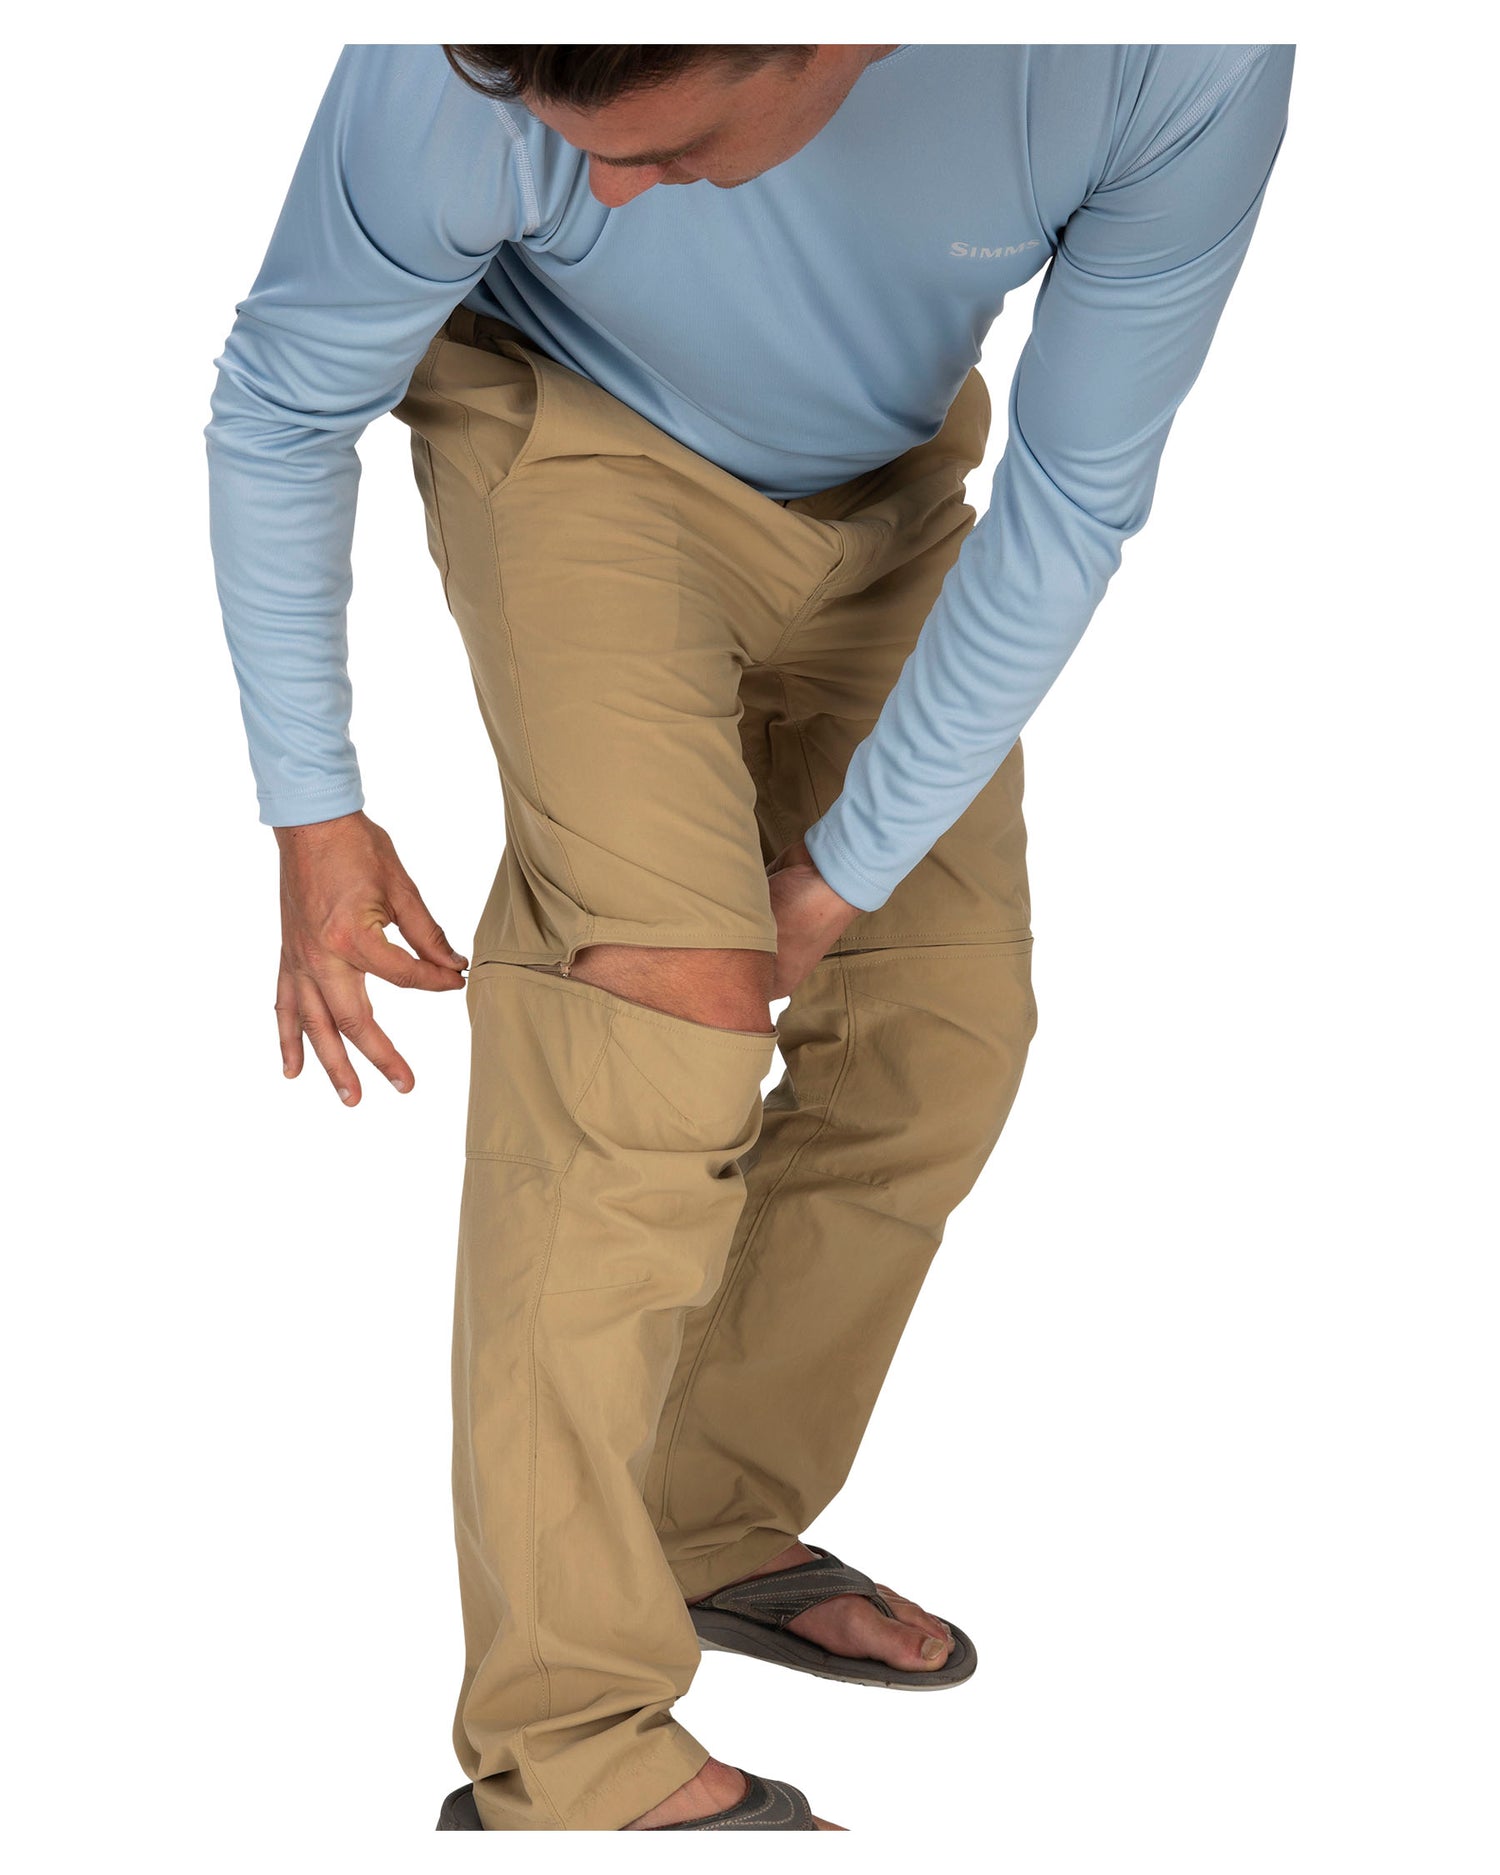 Buy Men's Outdoor Quick Dry Convertible Lightweight Hiking Fishing Zip Off  Cargo Work Pants Trousers at Amazon.in